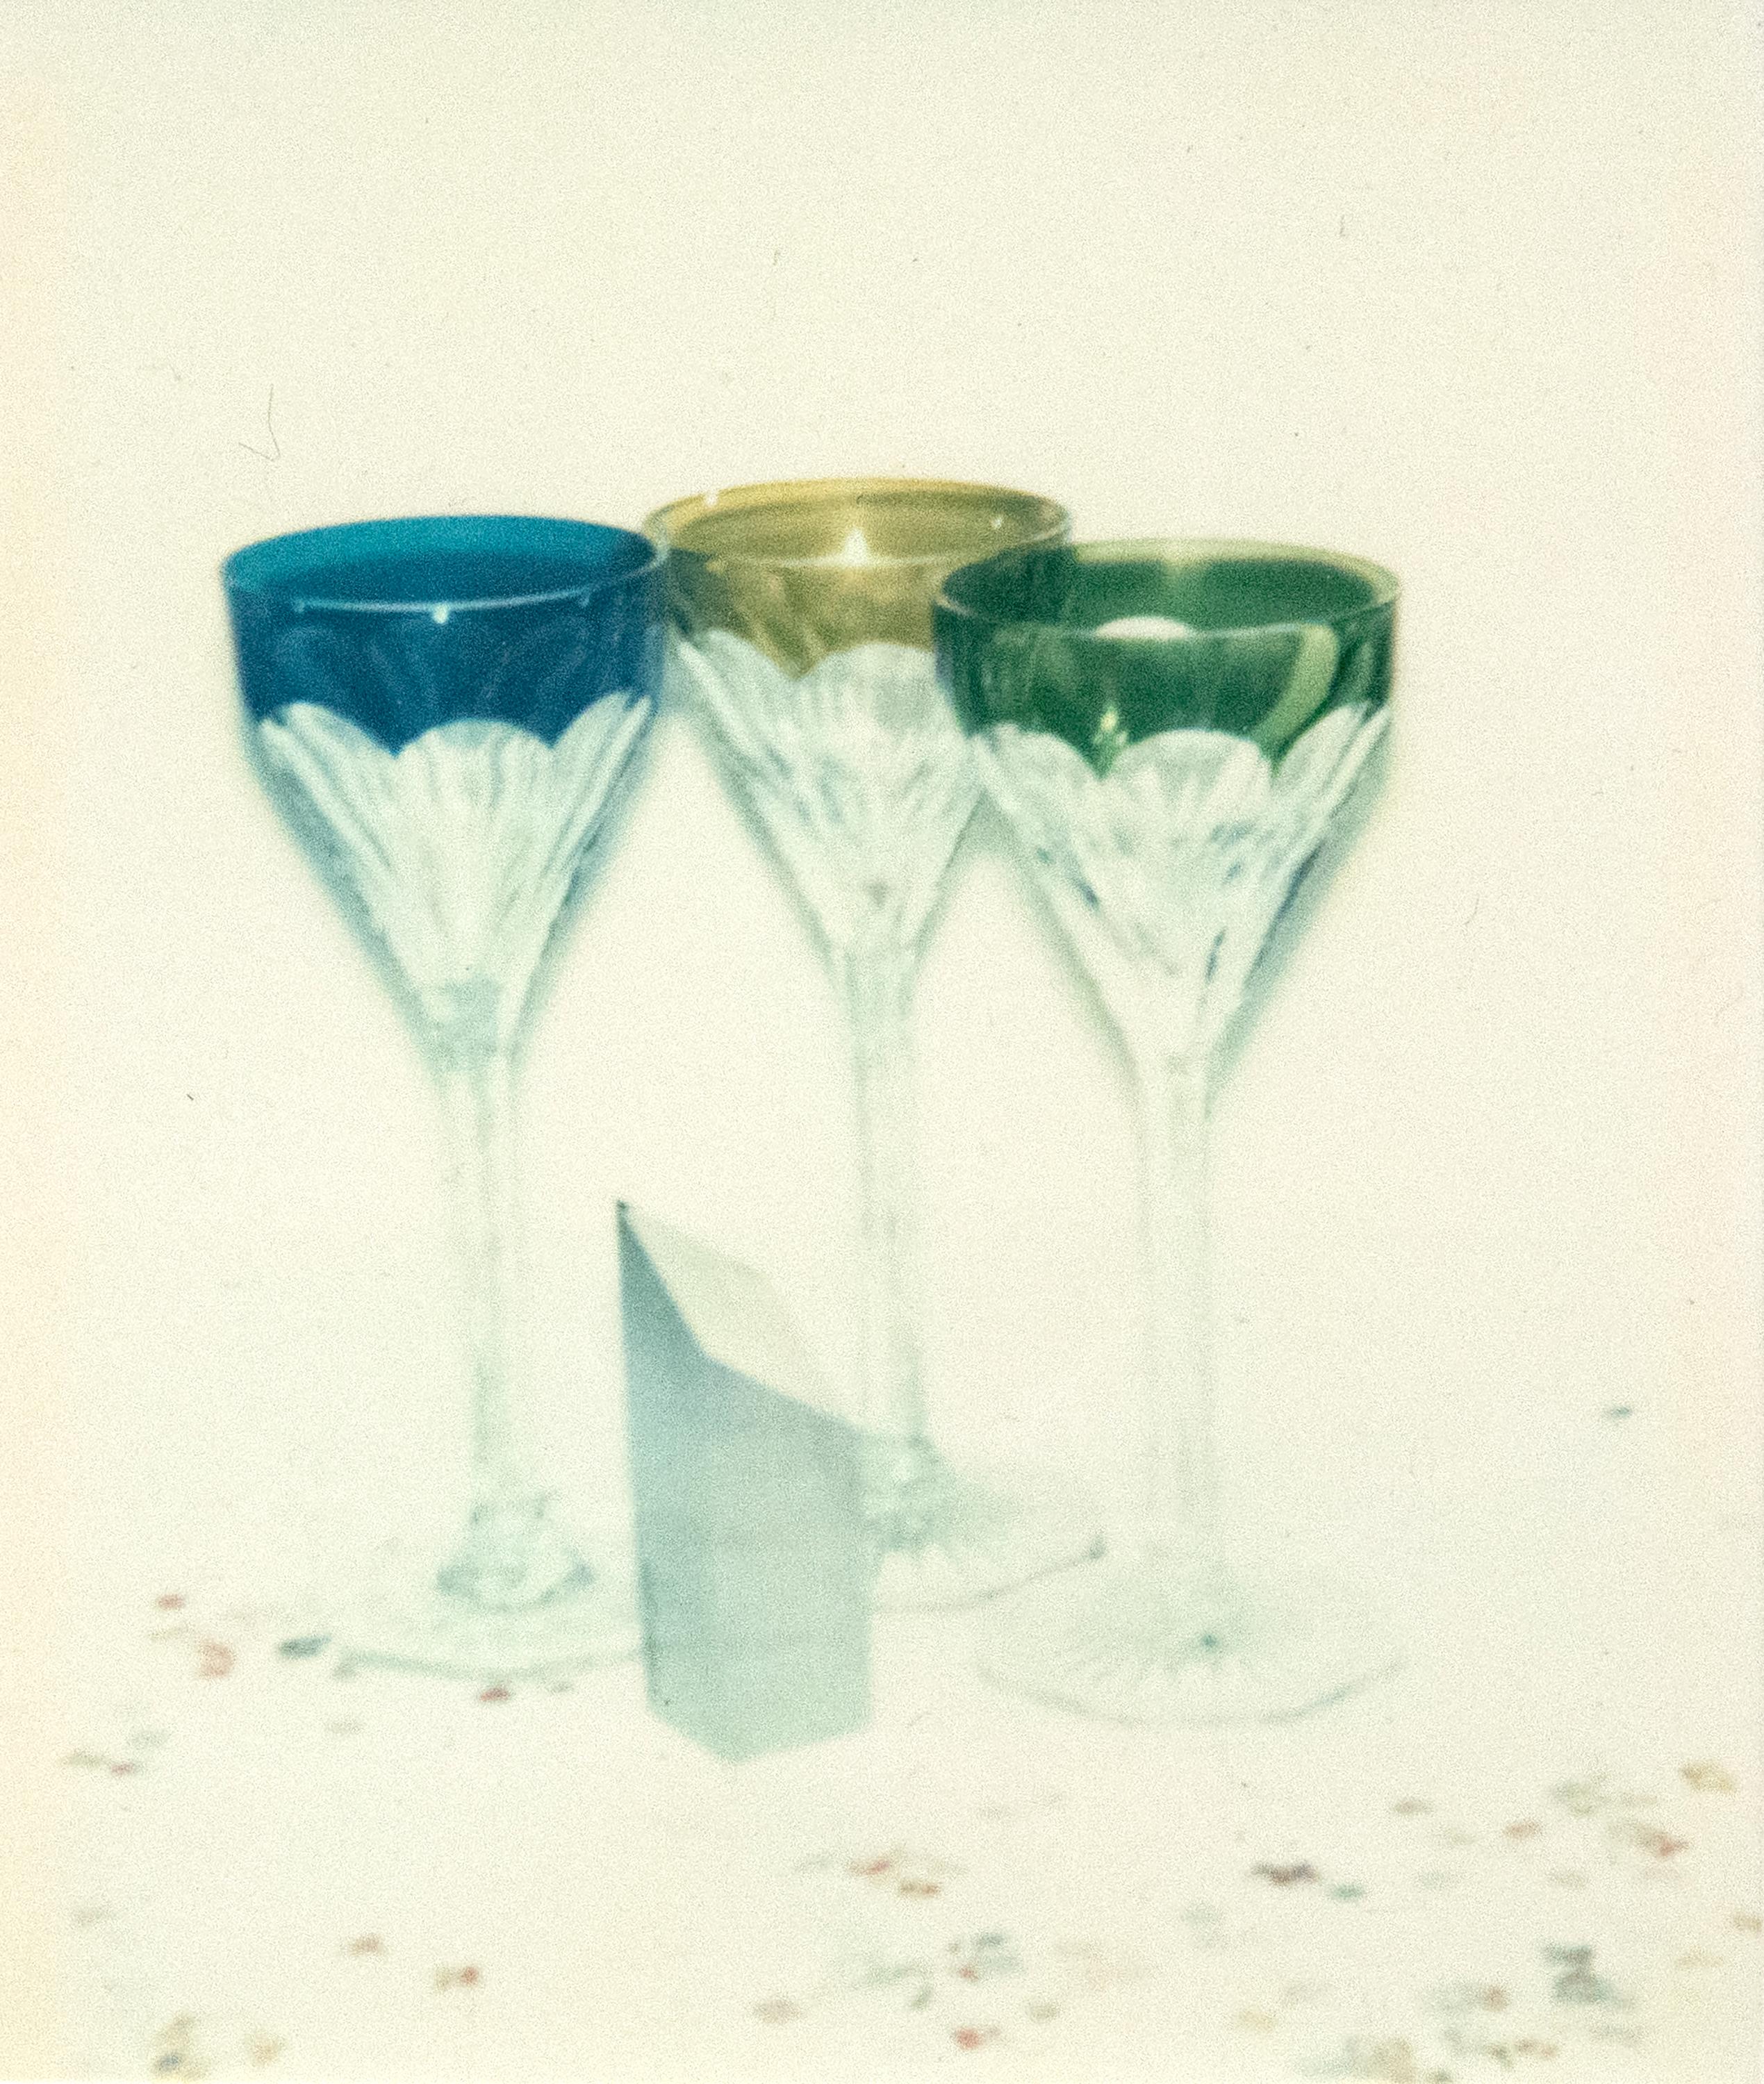 year 2000 champagne glasses